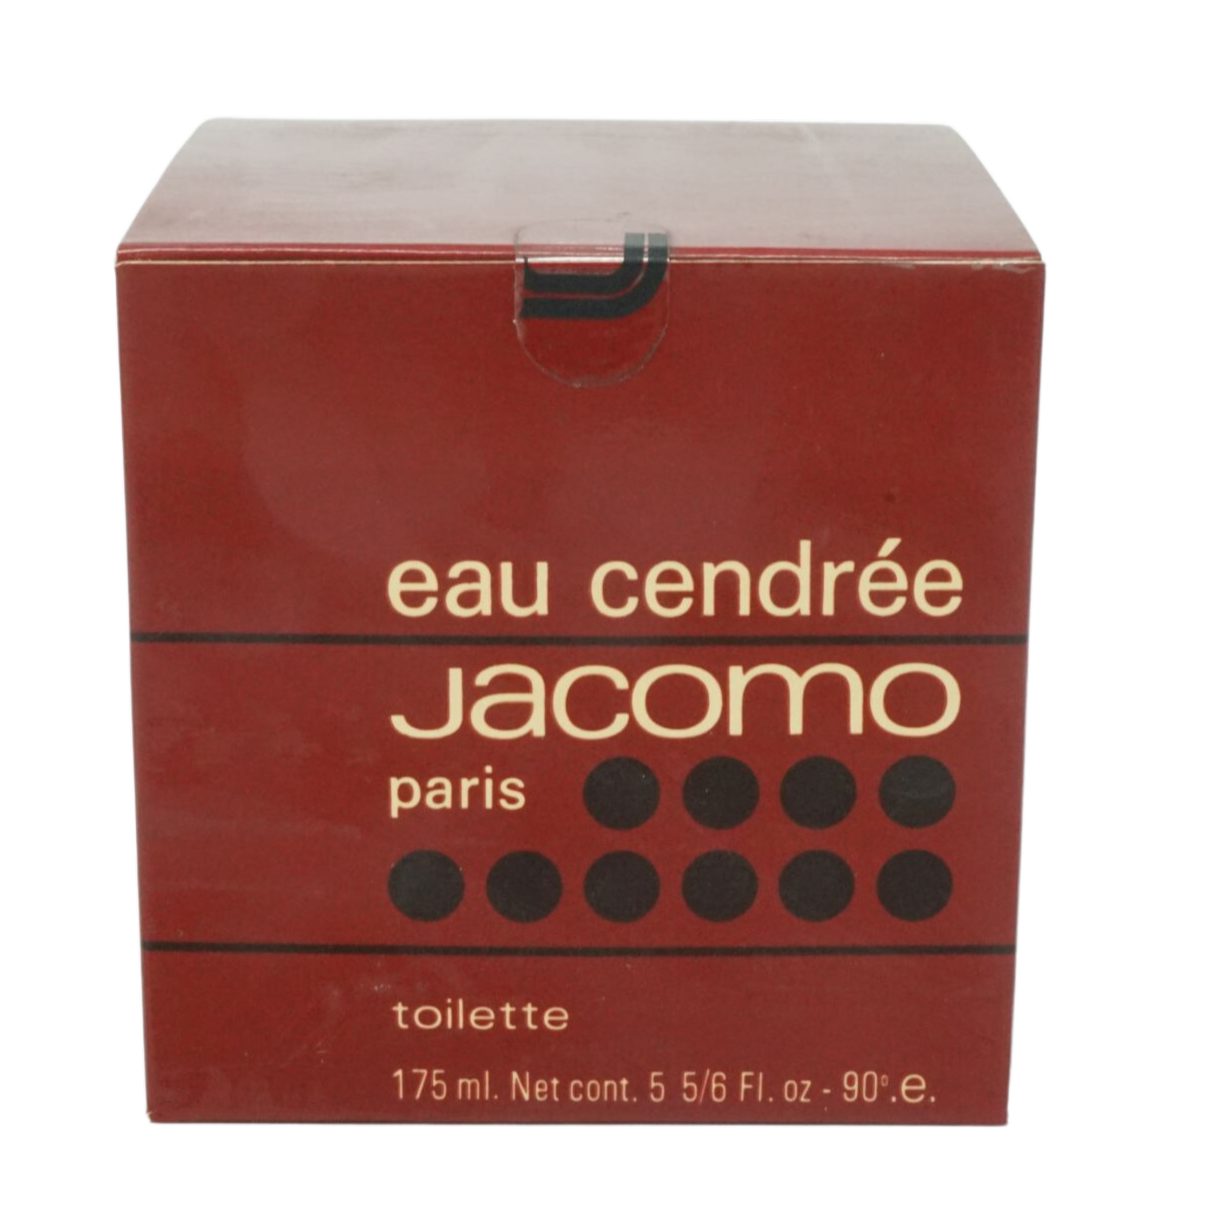 Jacomo Eau Toilette 175ml Jacomo Cendree Toilette de Eau